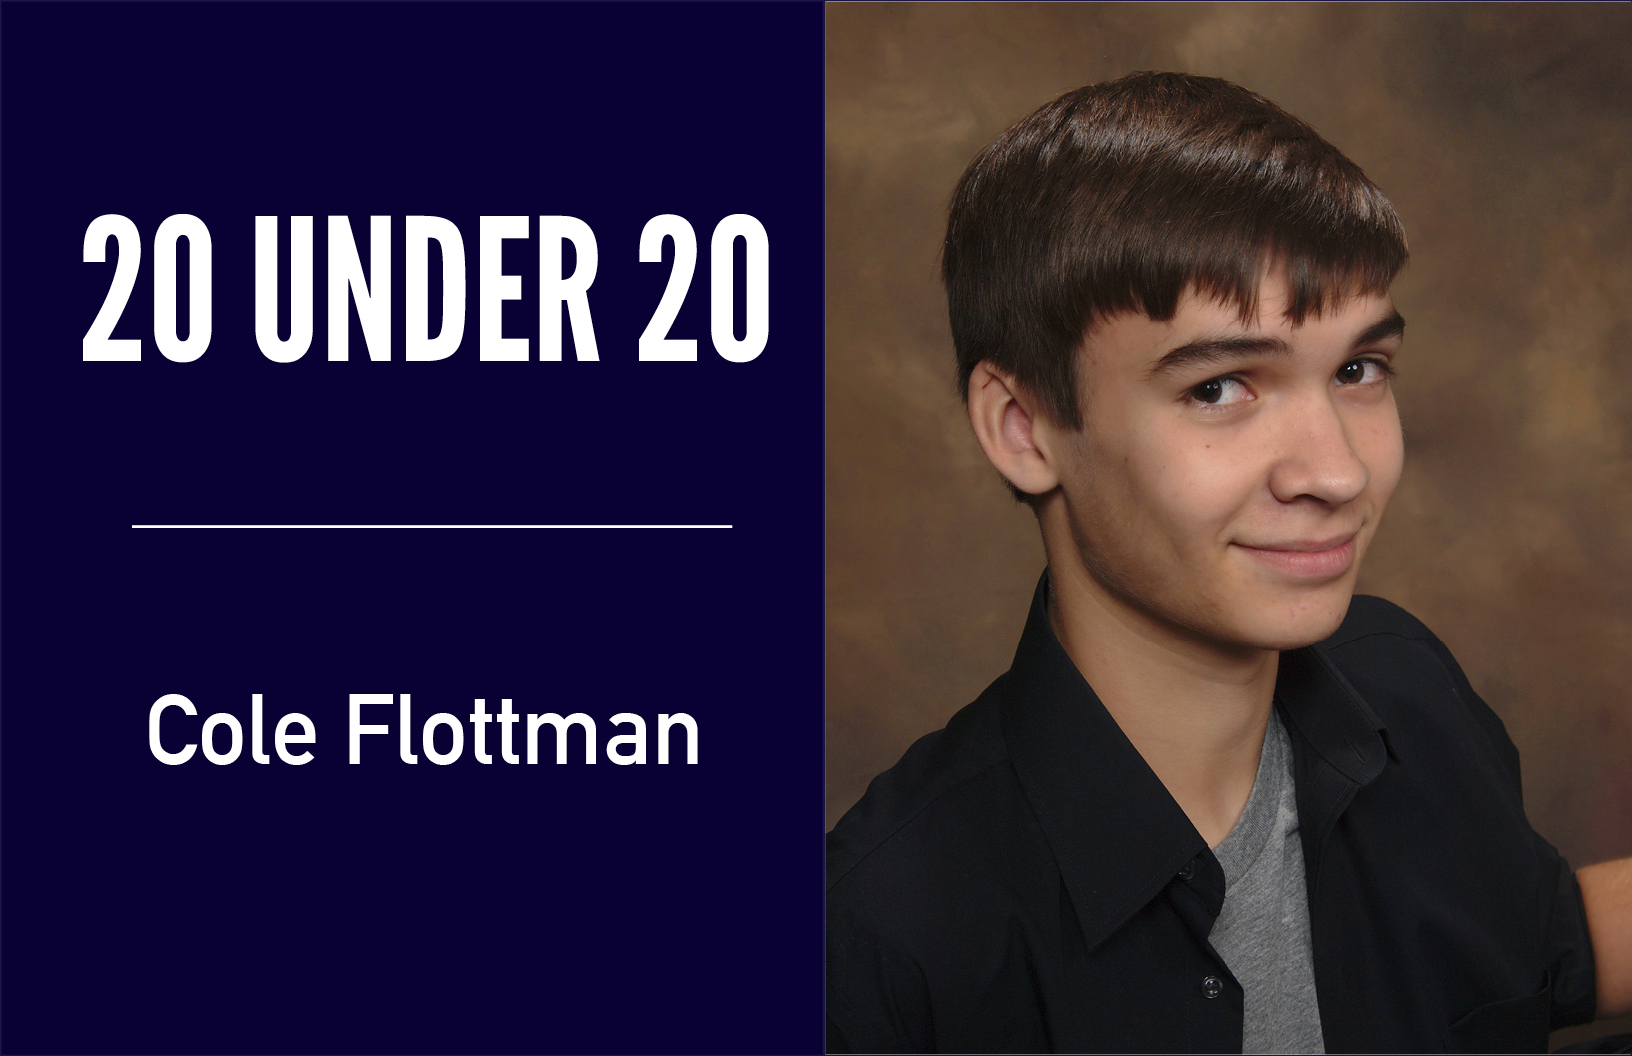 Cole-Flottman-20-under-20